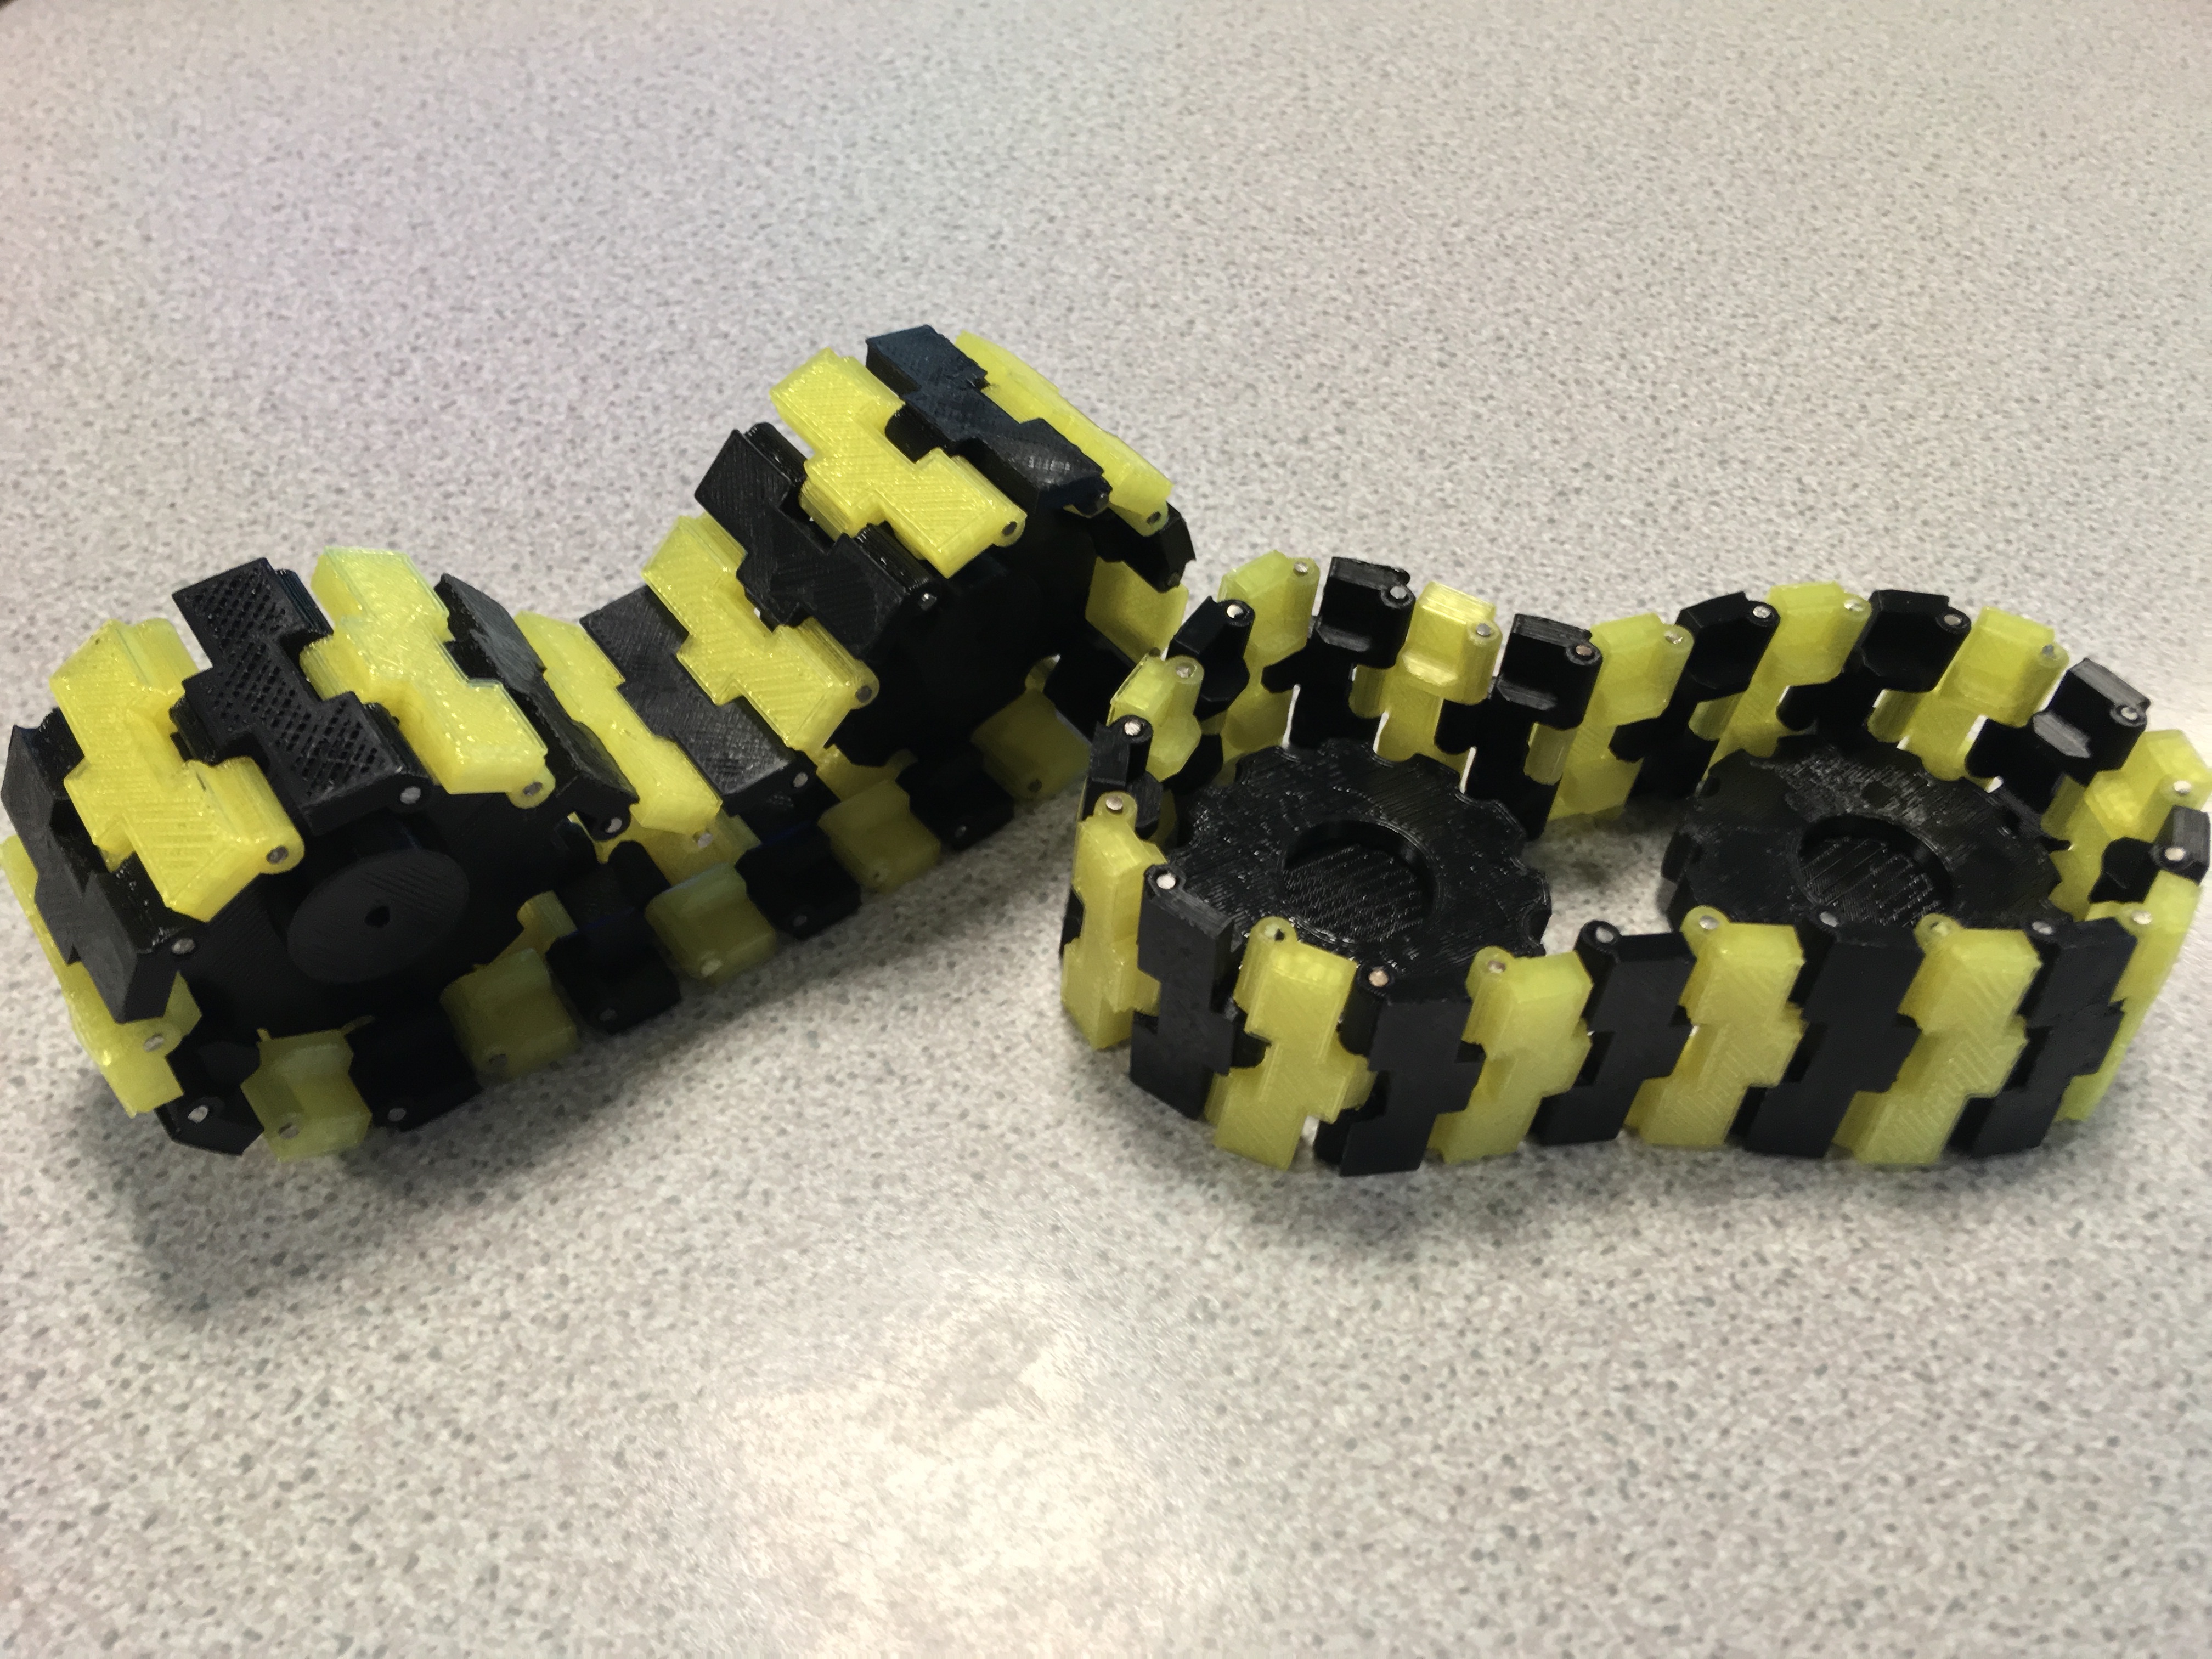 The 3D printed caterpillar tracks